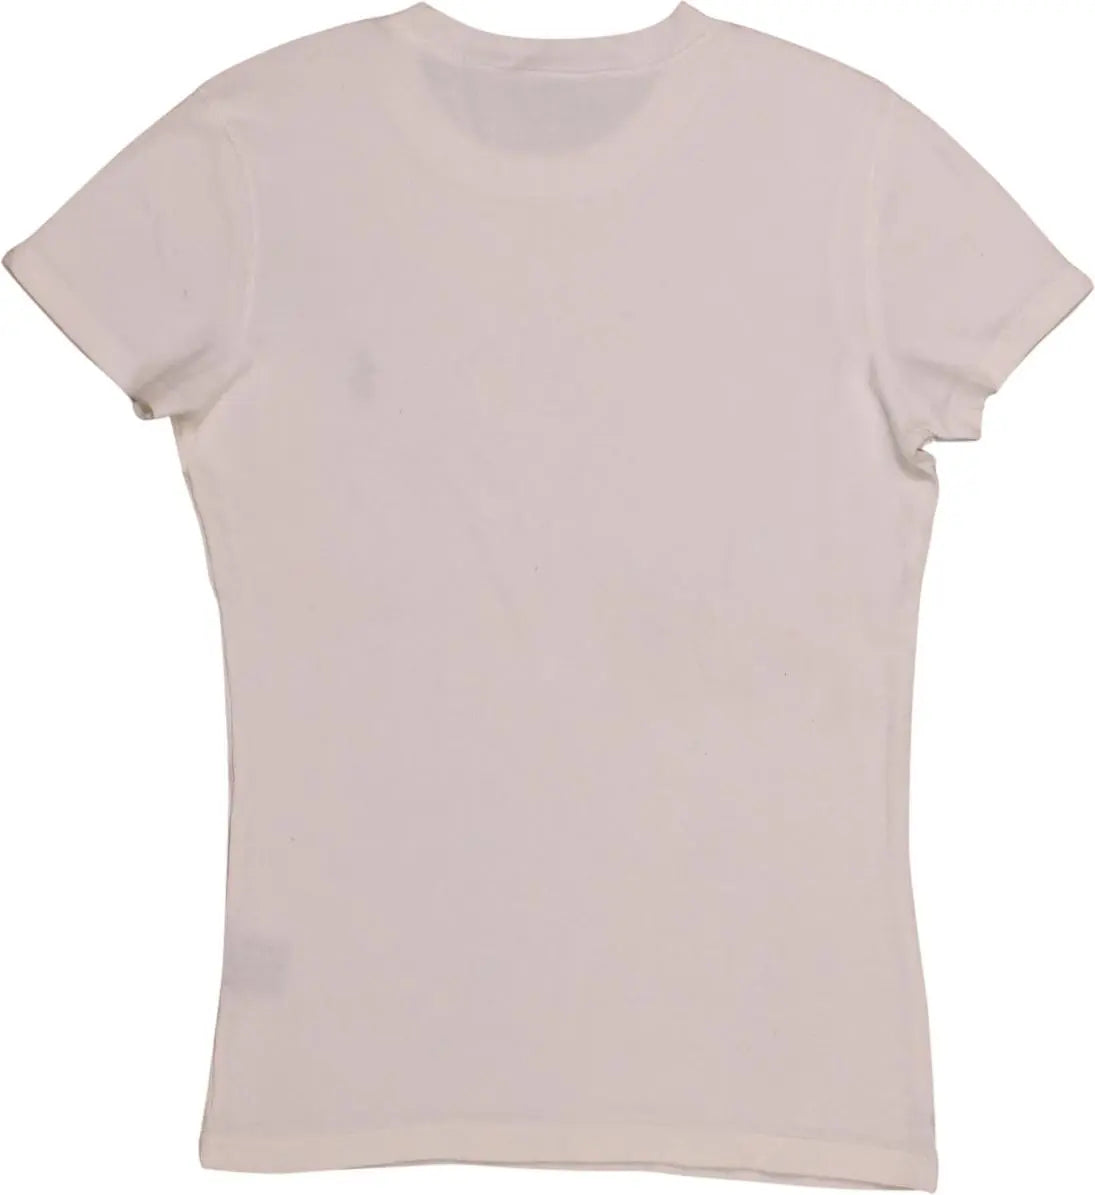 Ralph Lauren - White T-shirt by Ralph Lauren Sport- ThriftTale.com - Vintage and second handclothing